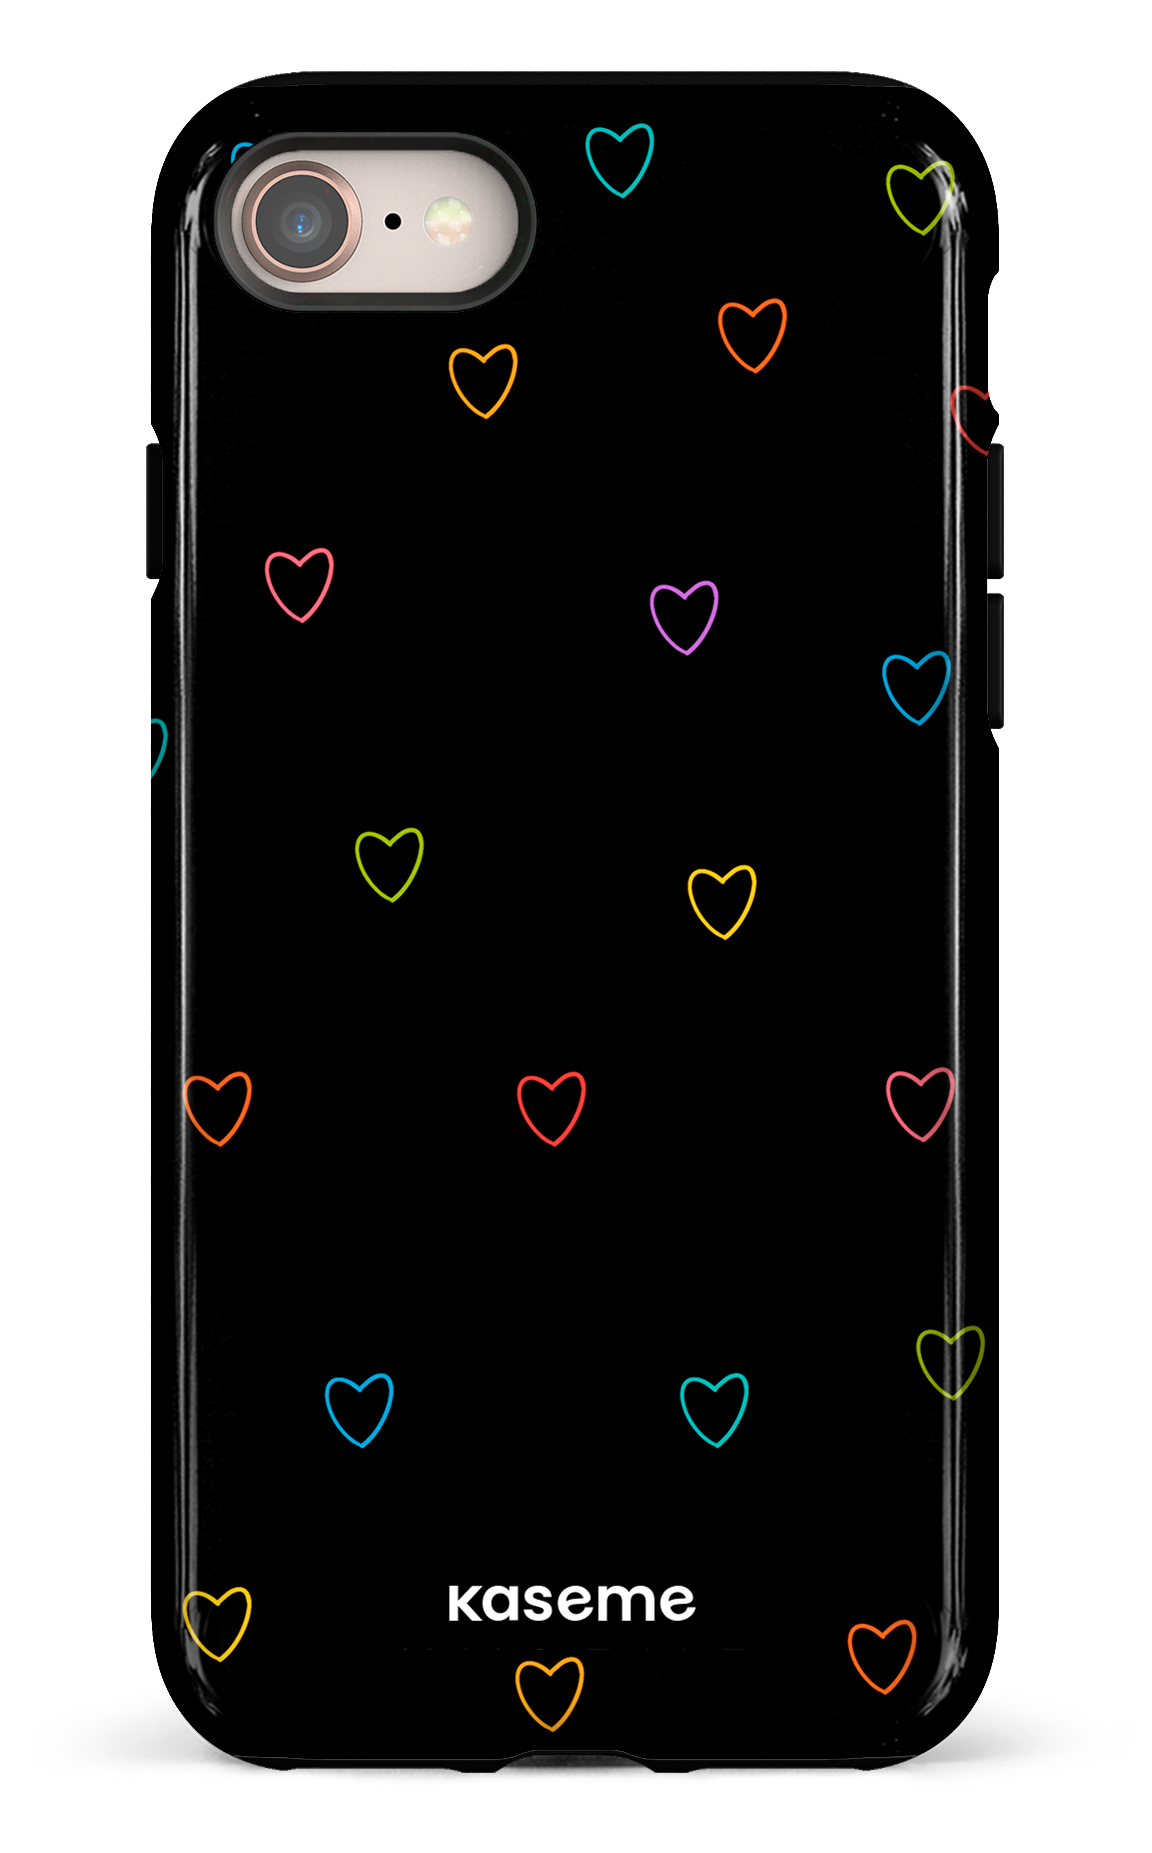 Love Wins - iPhone 8